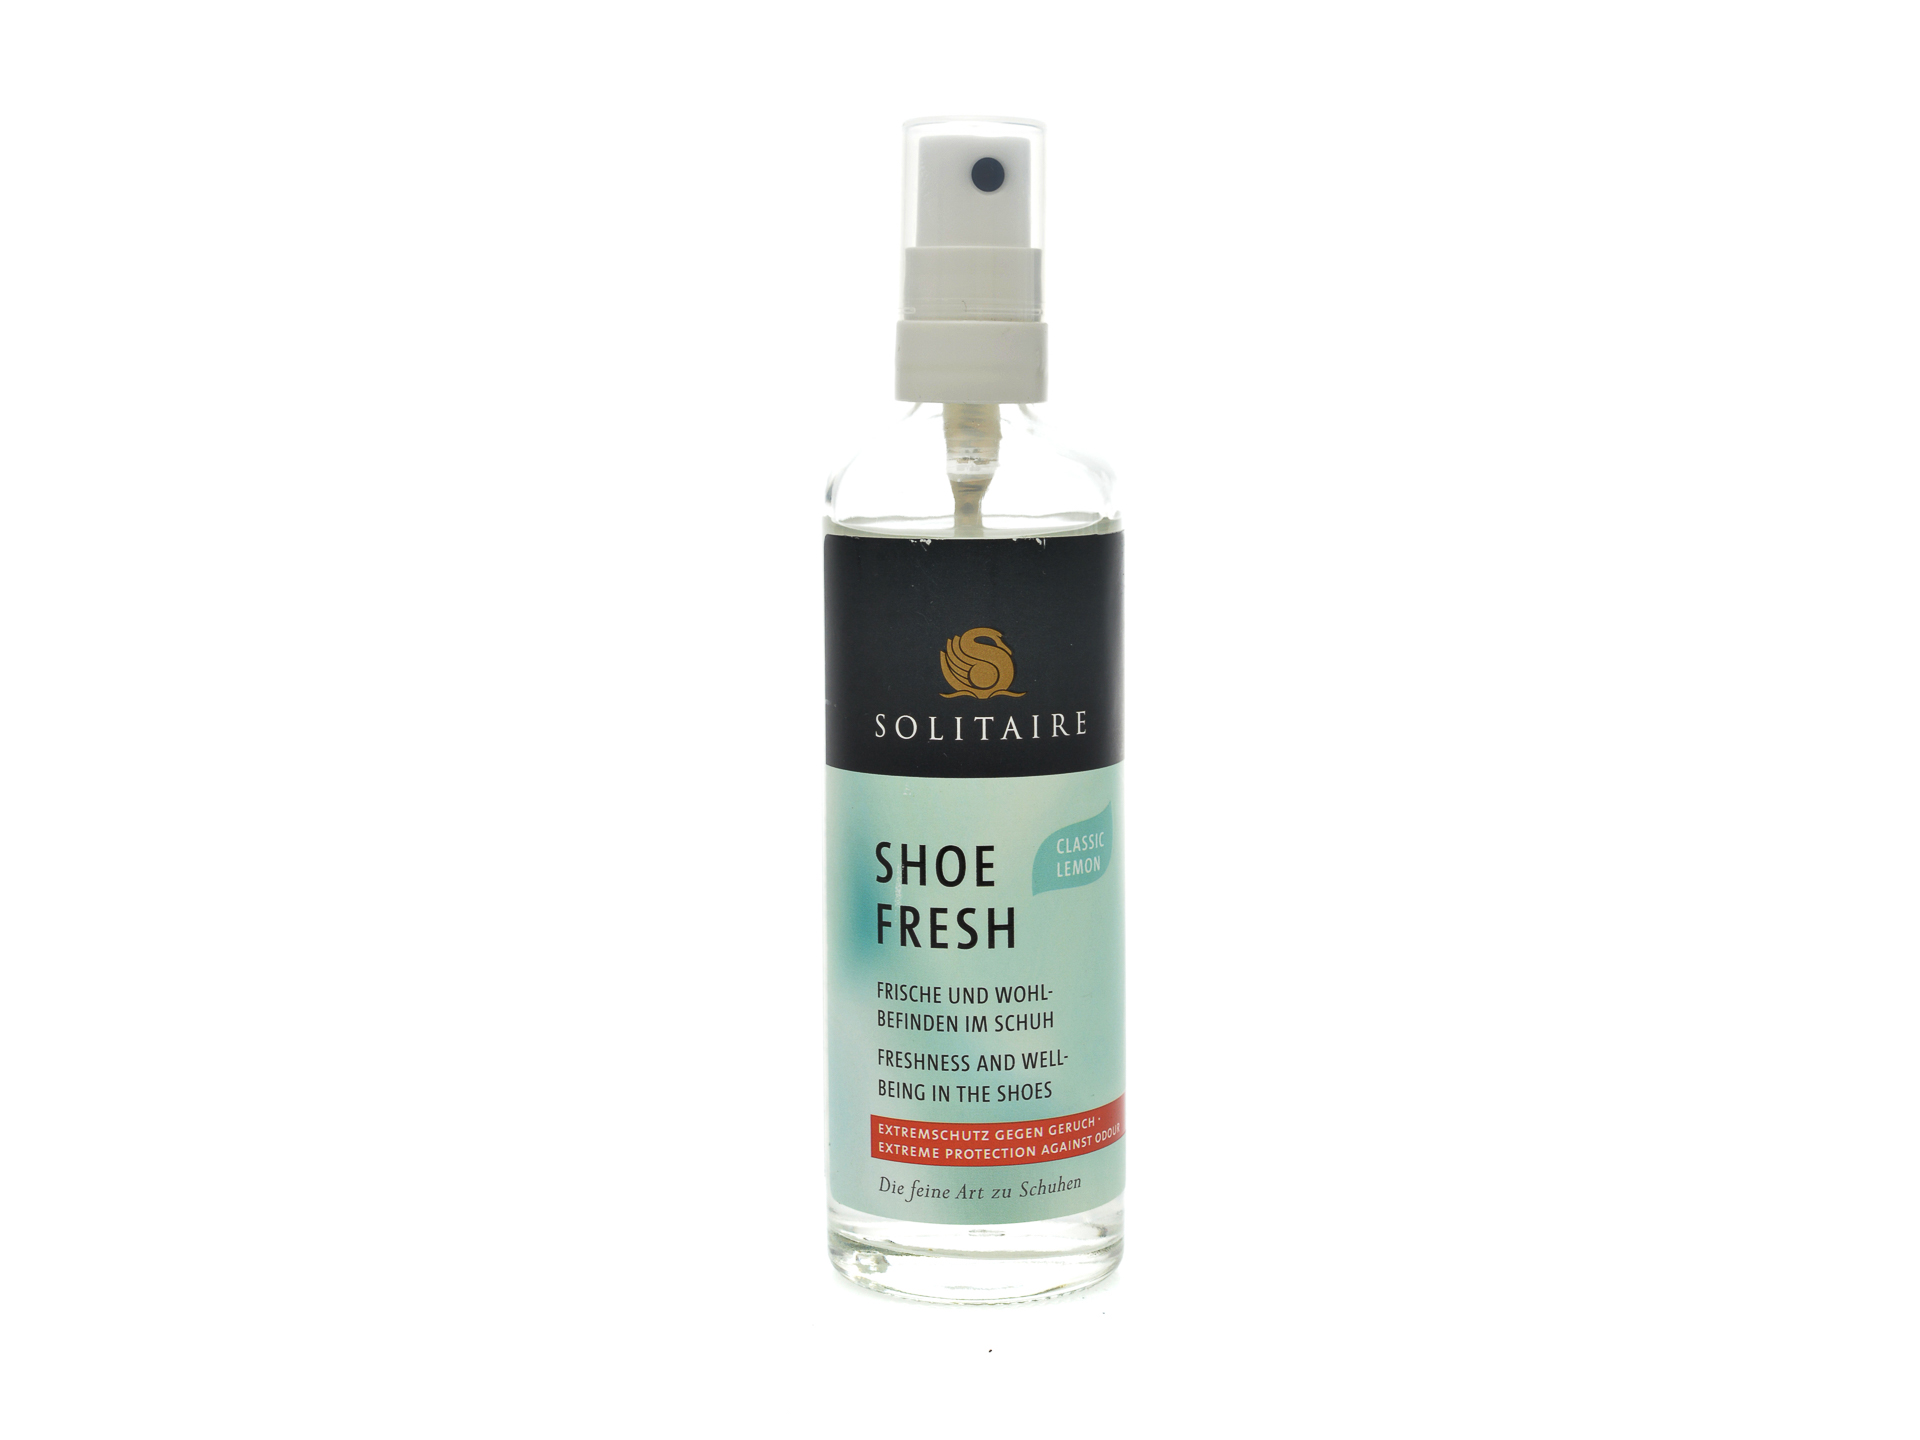 PR Spray pentru mentinerea mirosului placut in incaltaminte, Solitaire image5